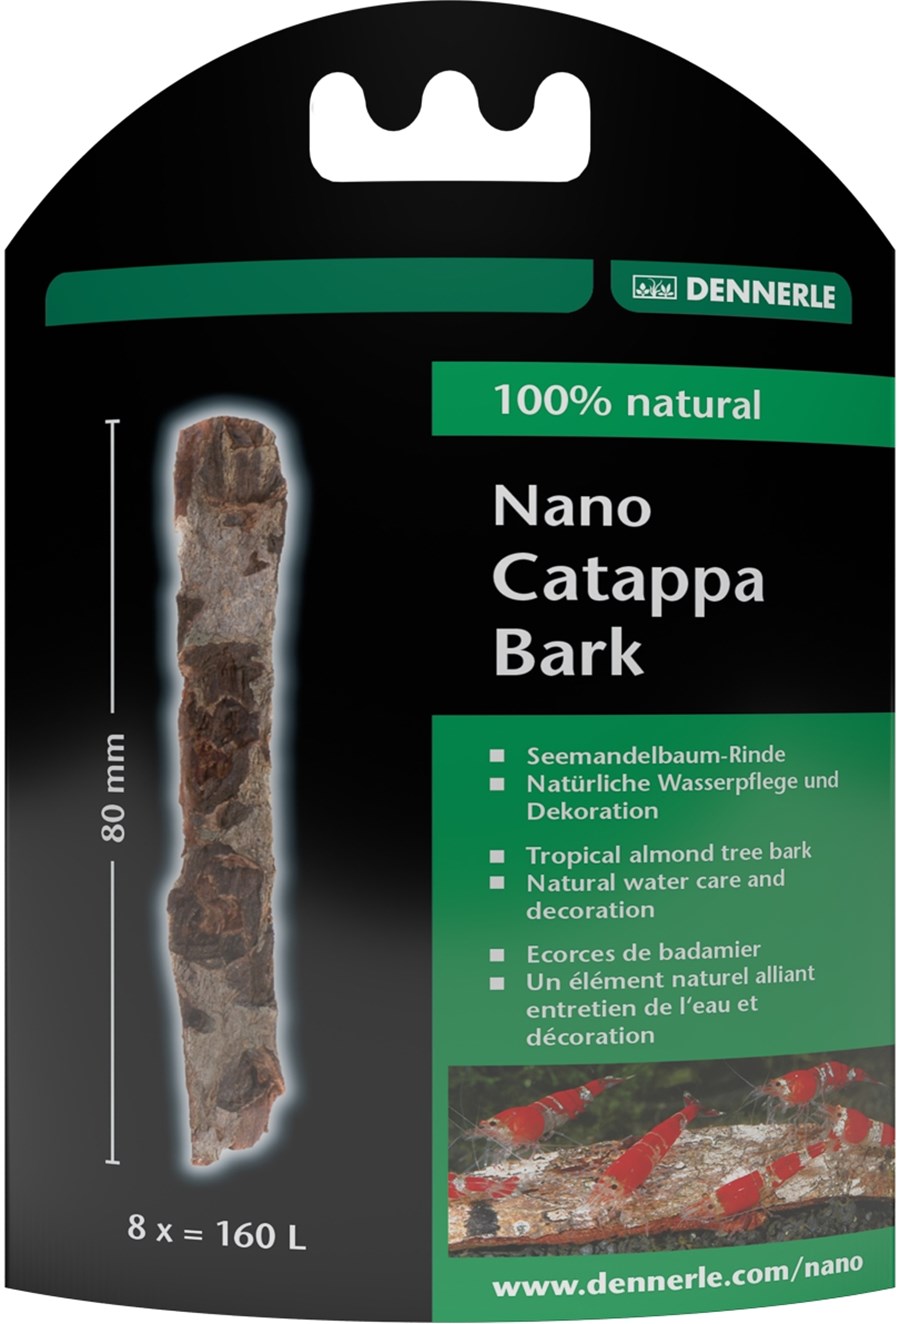 Nano Catappa bark